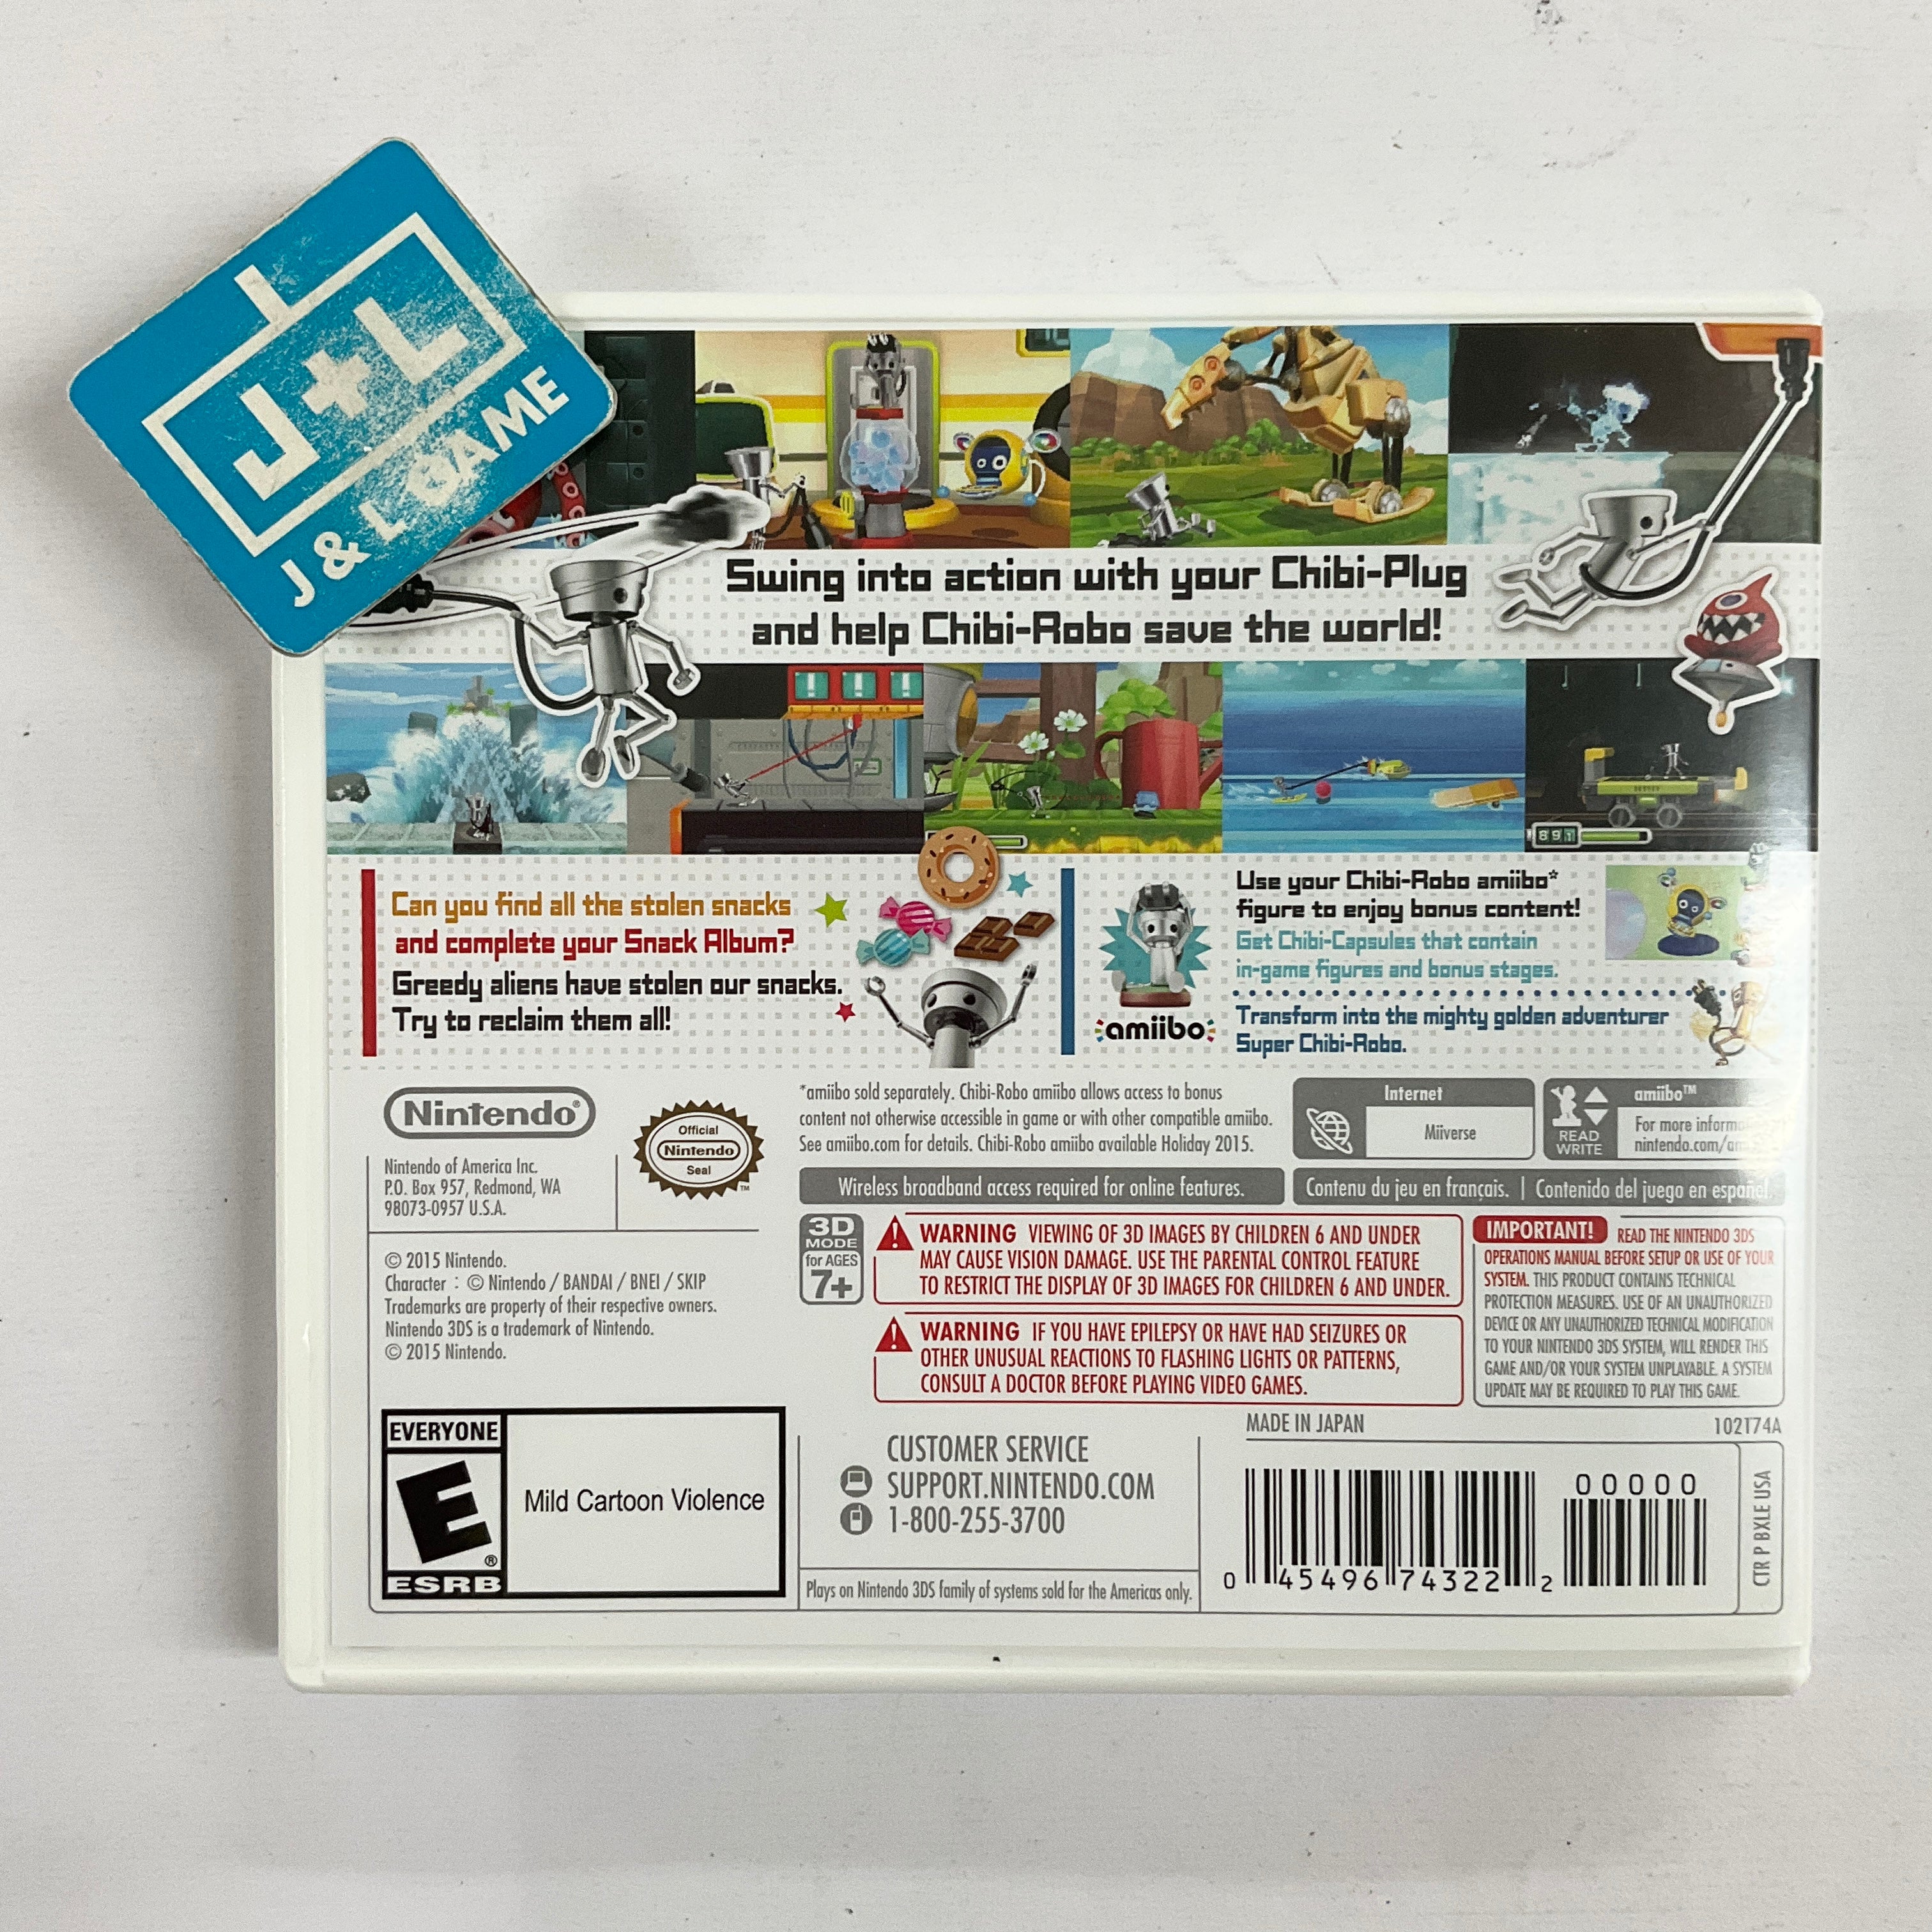 Chibi-Robo! Zip Lash - Nintendo 3DS [Pre-Owned] Video Games Nintendo   